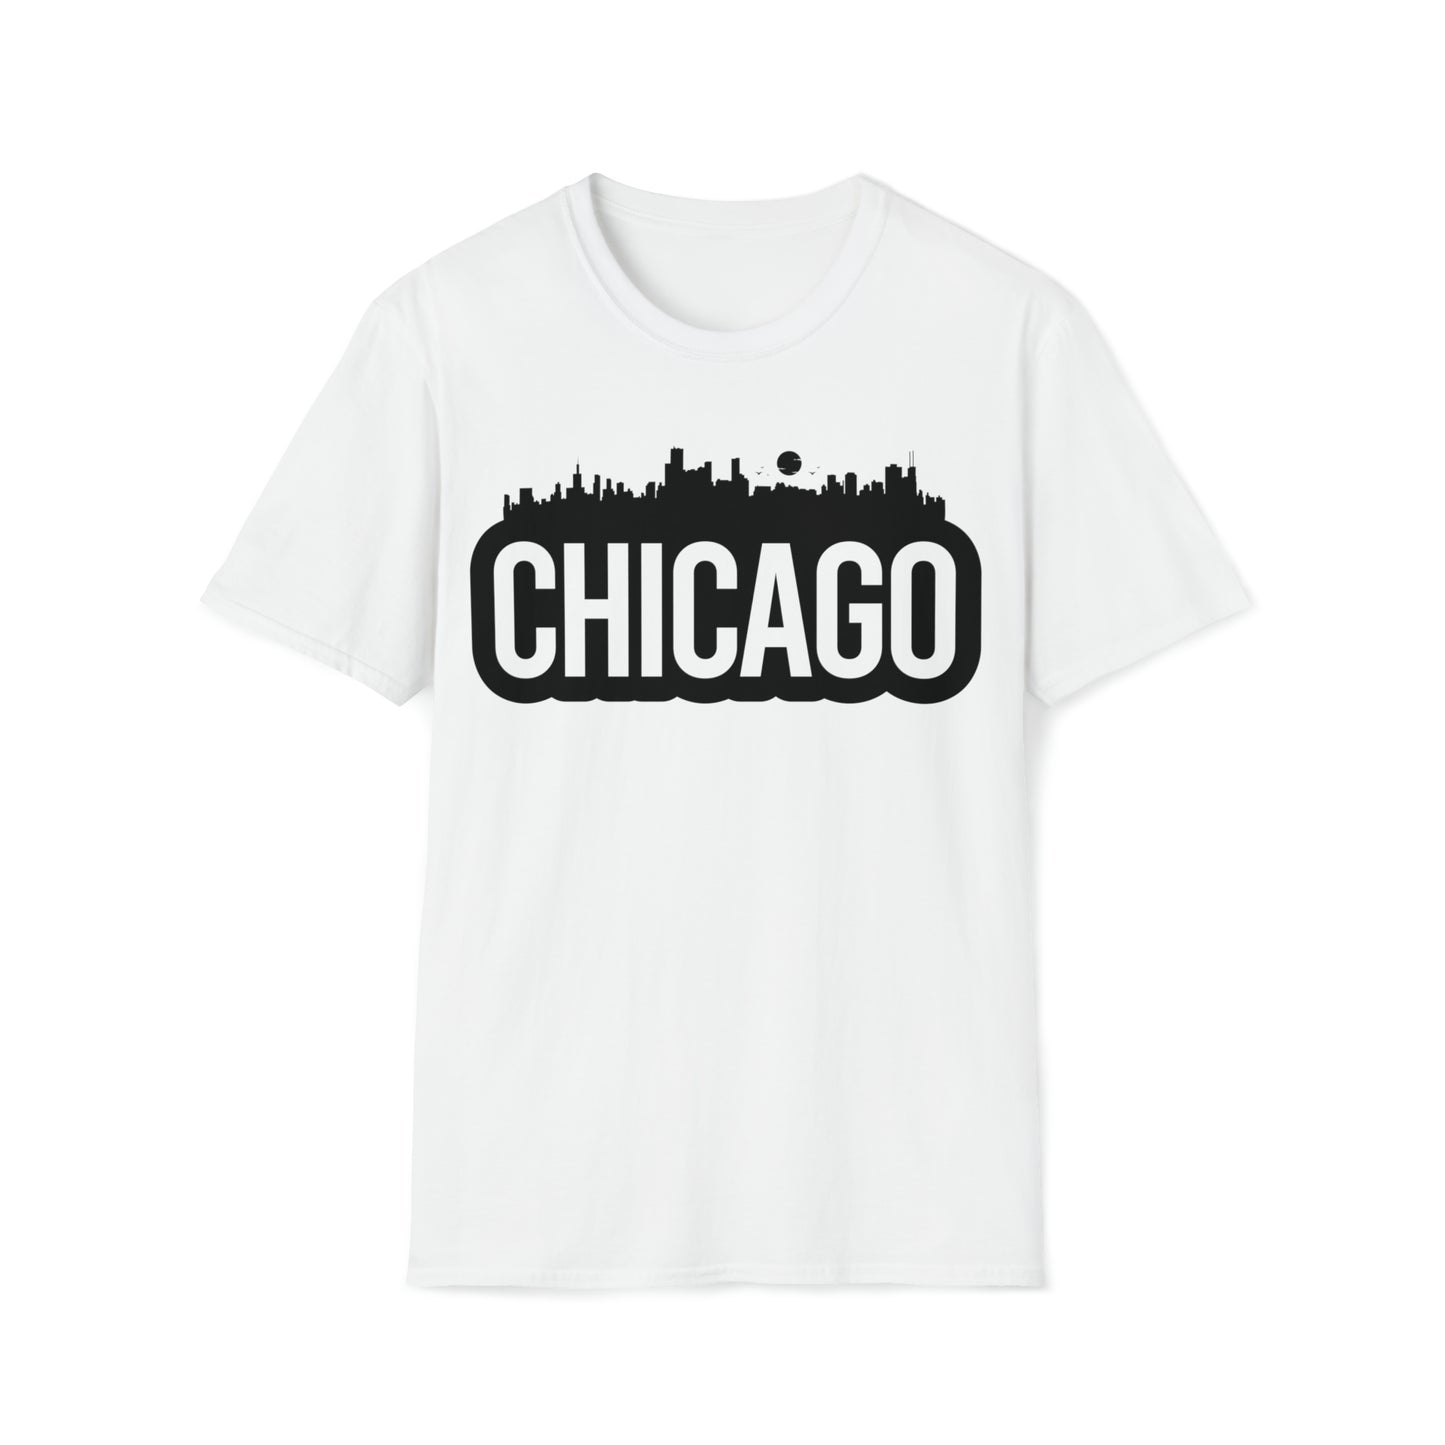 Chicago Illinois Skyline Shirt